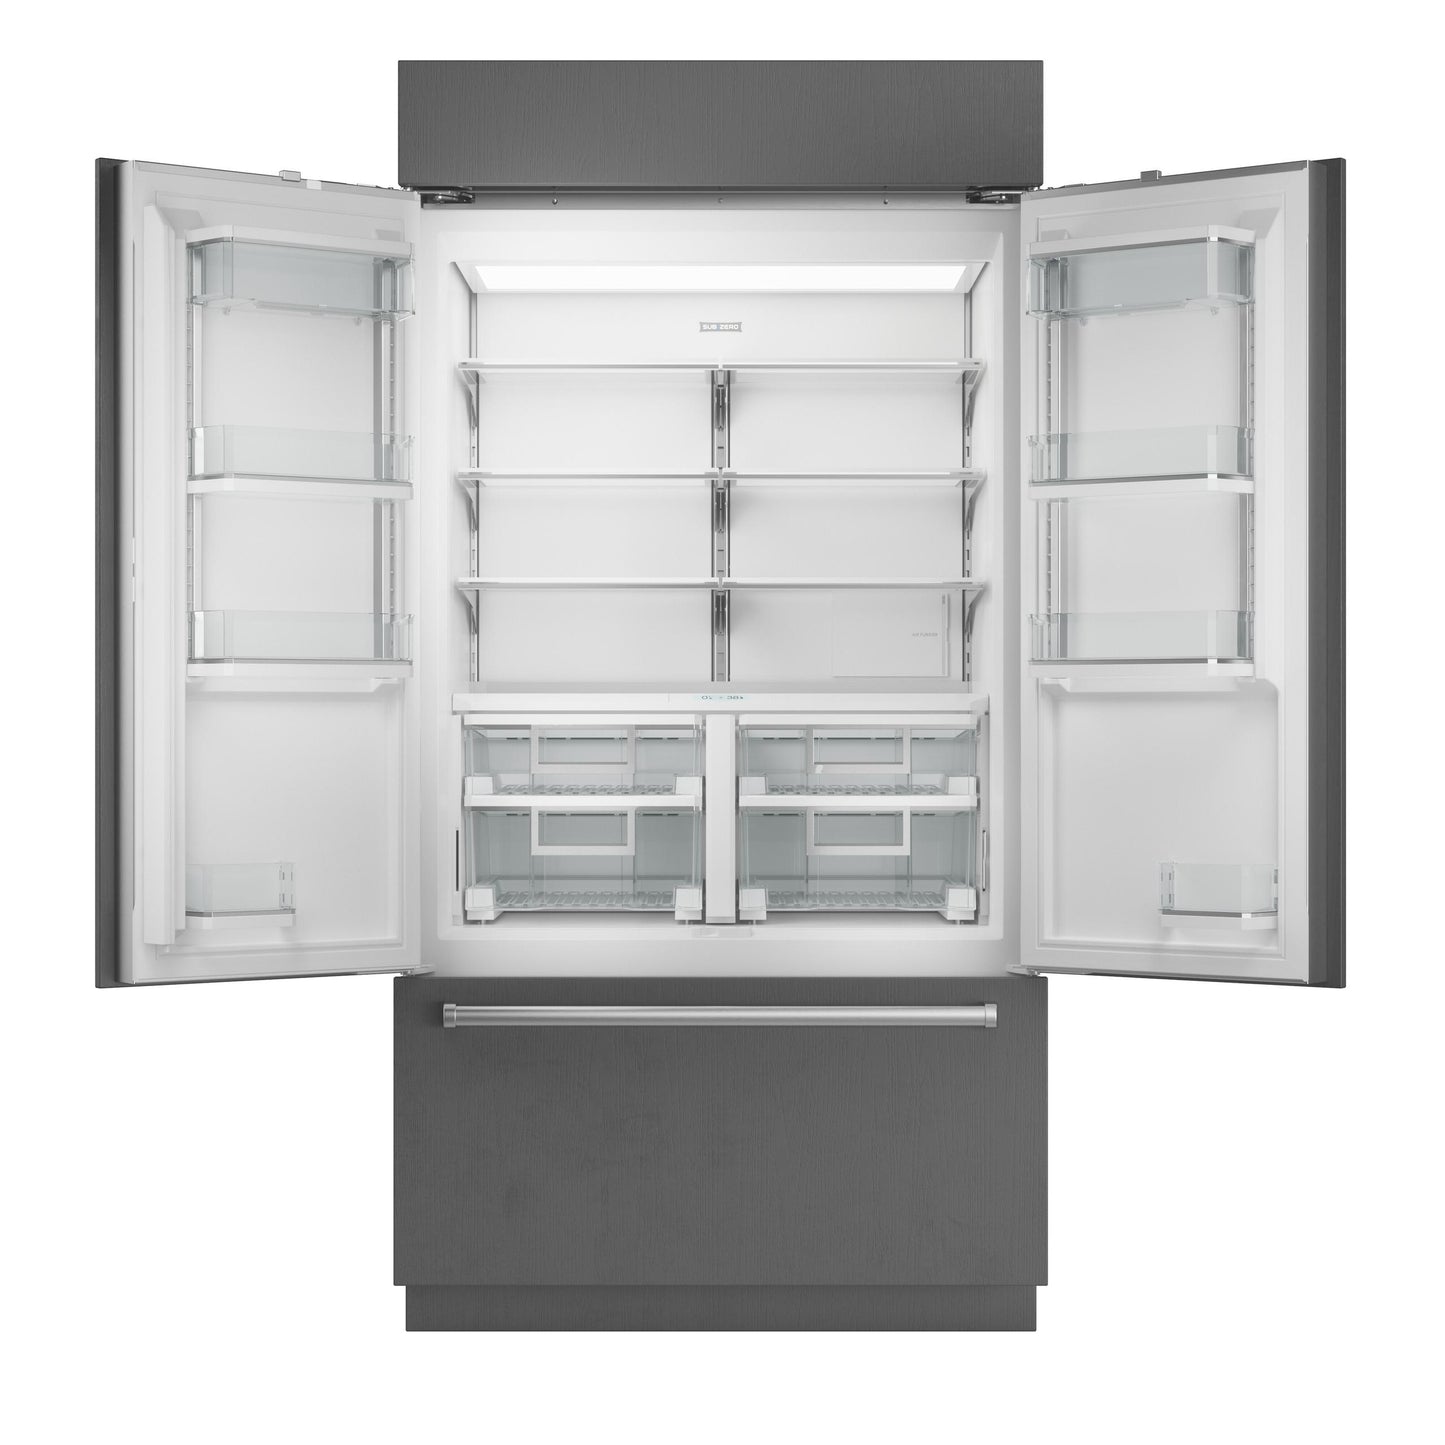 Sub-Zero CL4250UFDSP 42" Classic French Door Refrigerator/Freezer